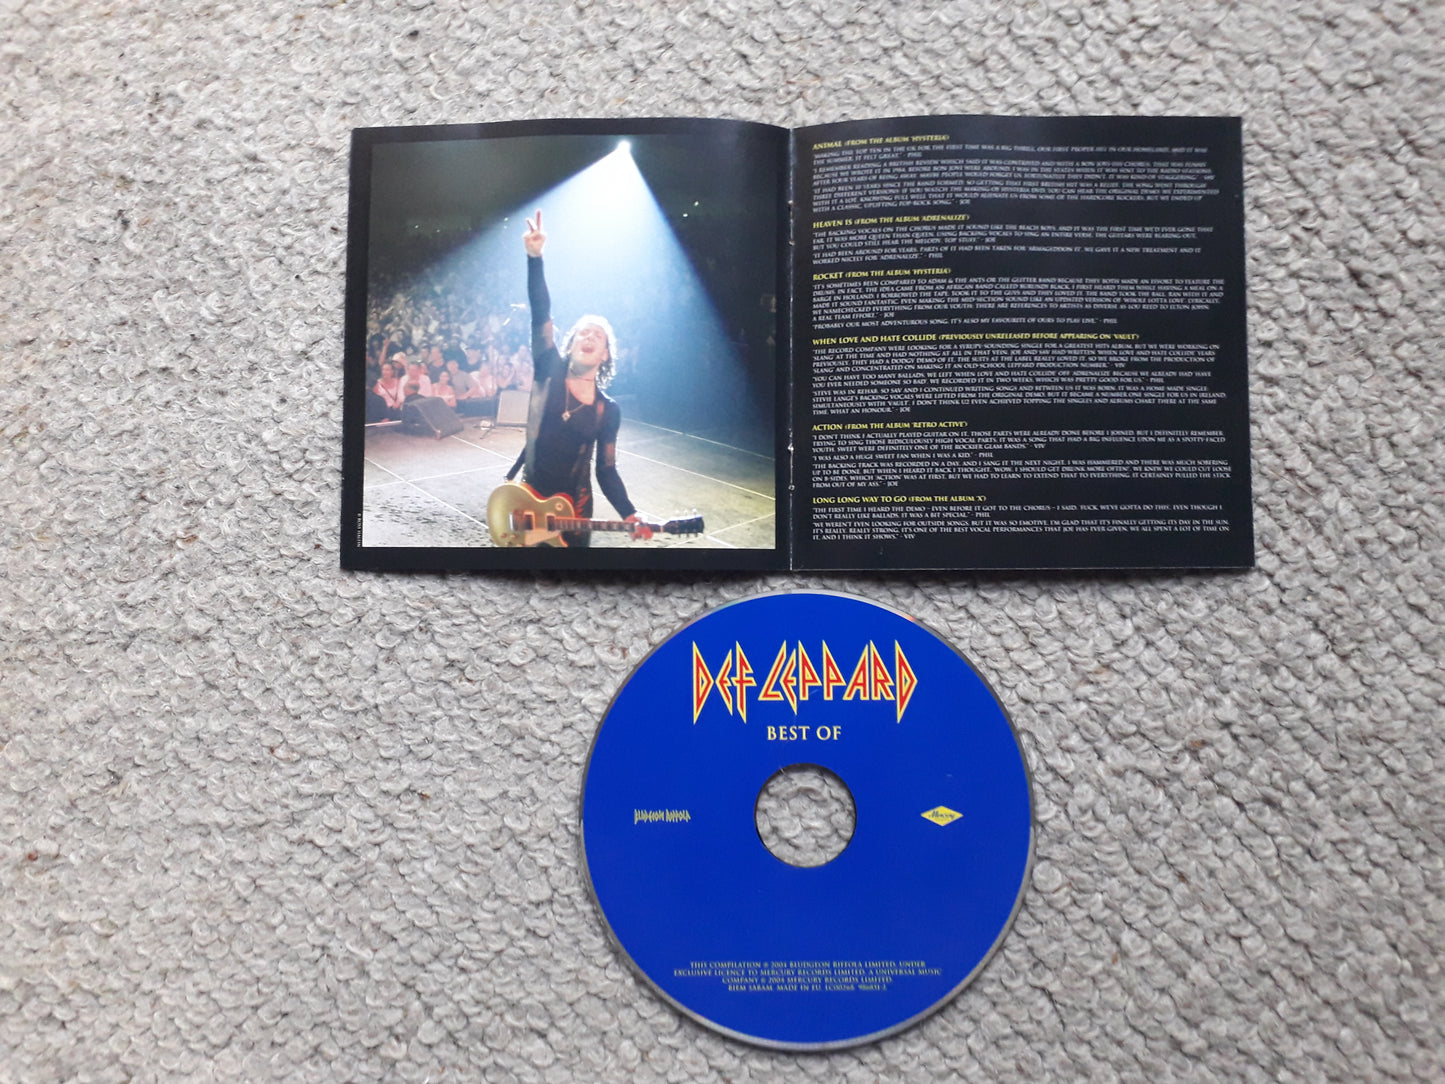 Def Leppard-Best Of CD (986851-2)